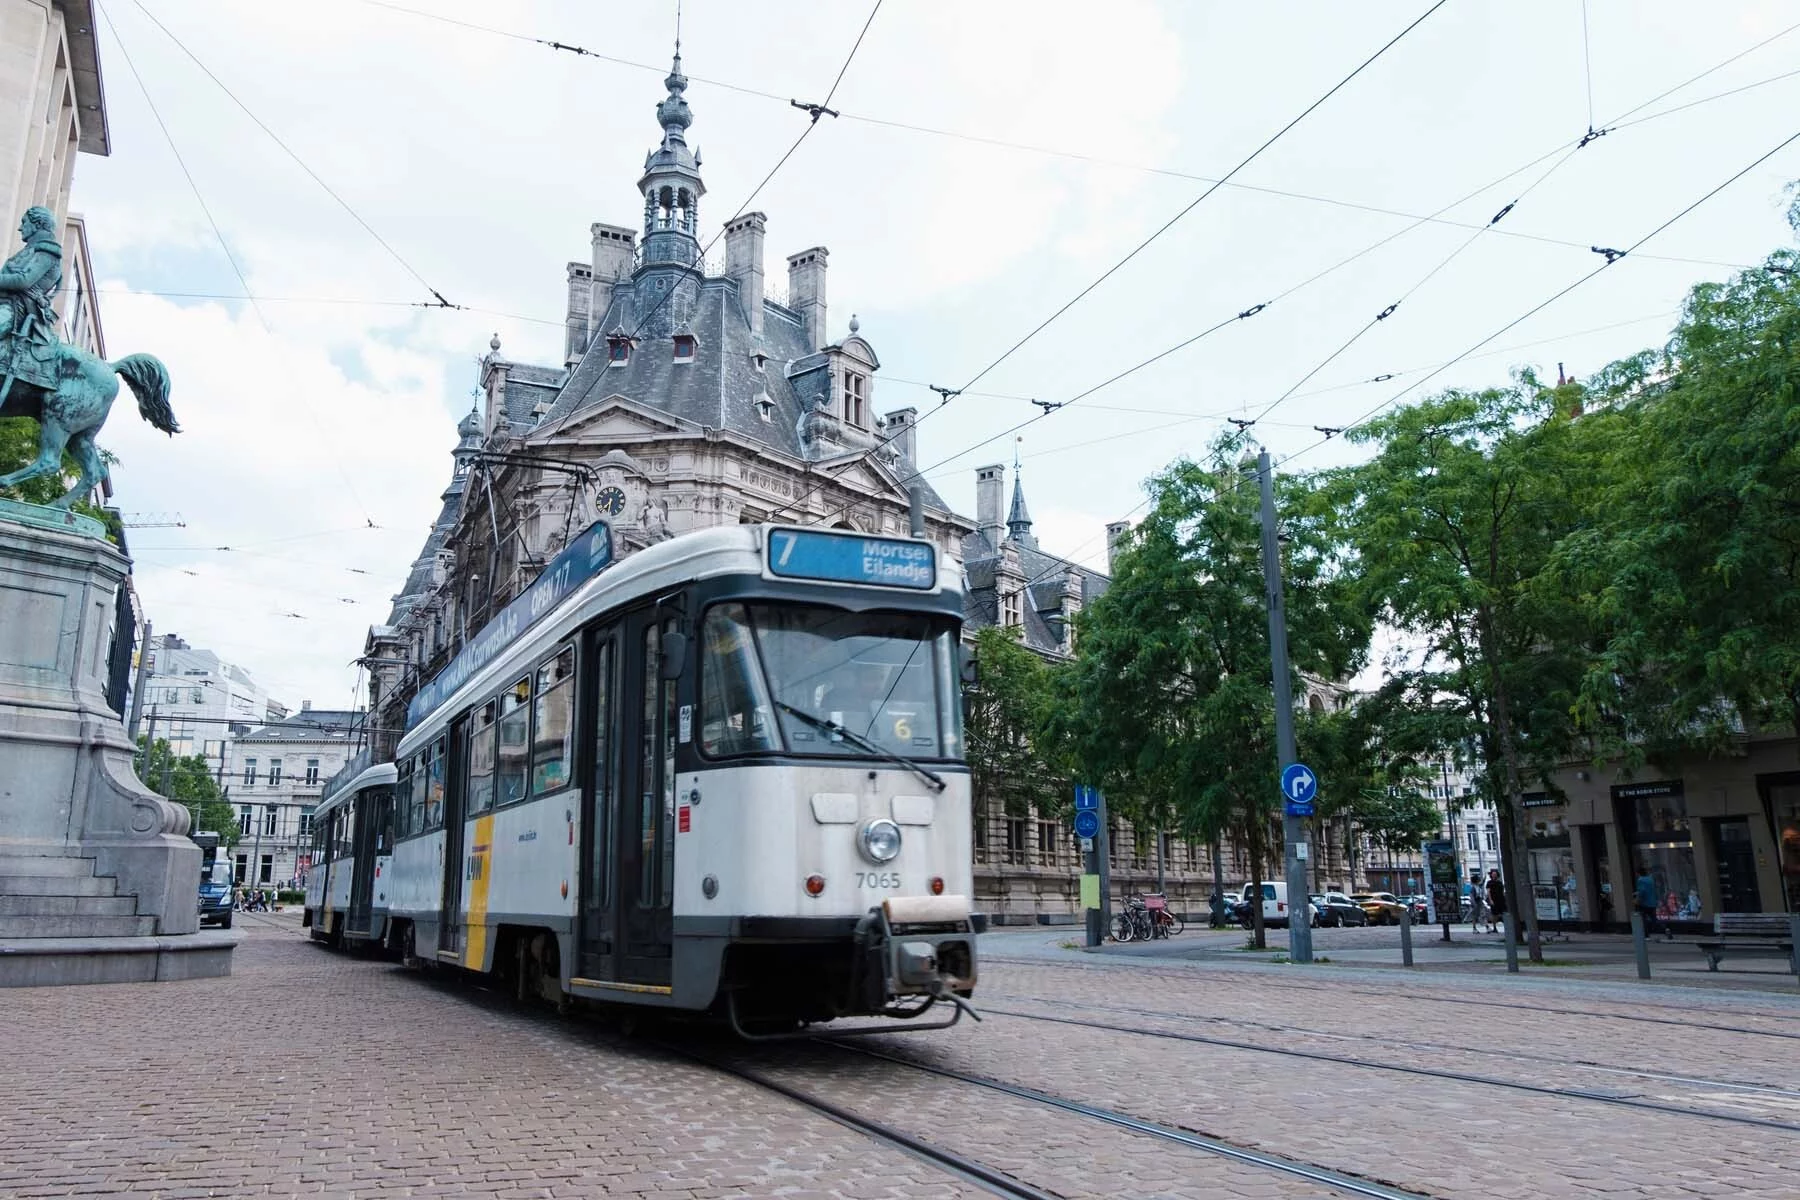 public transport Belgium - Antwerp tram